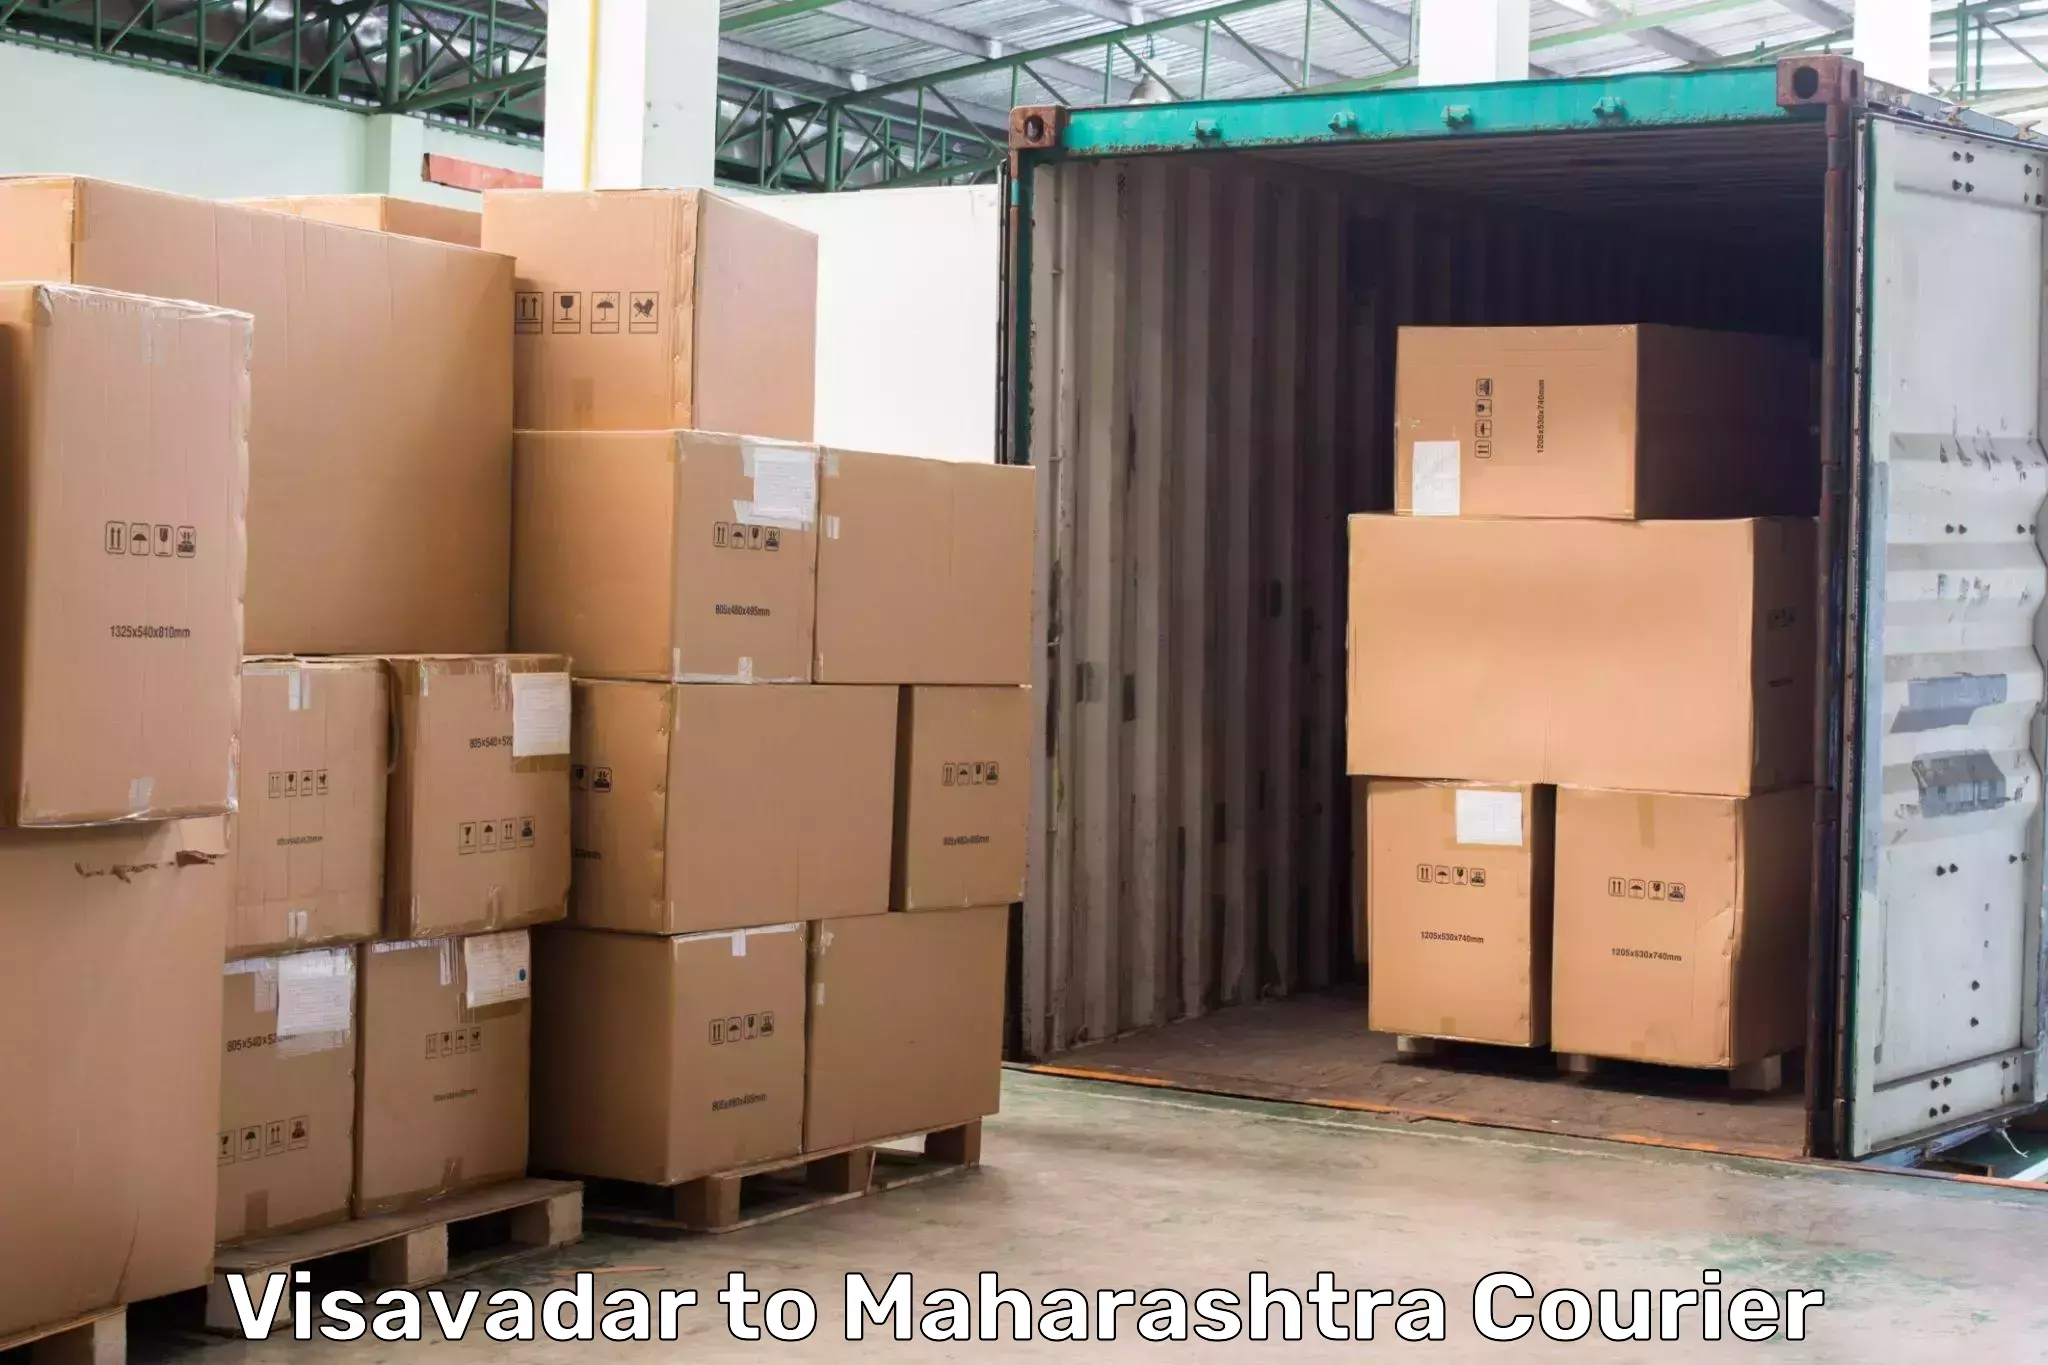 Express delivery capabilities Visavadar to Aurangabad